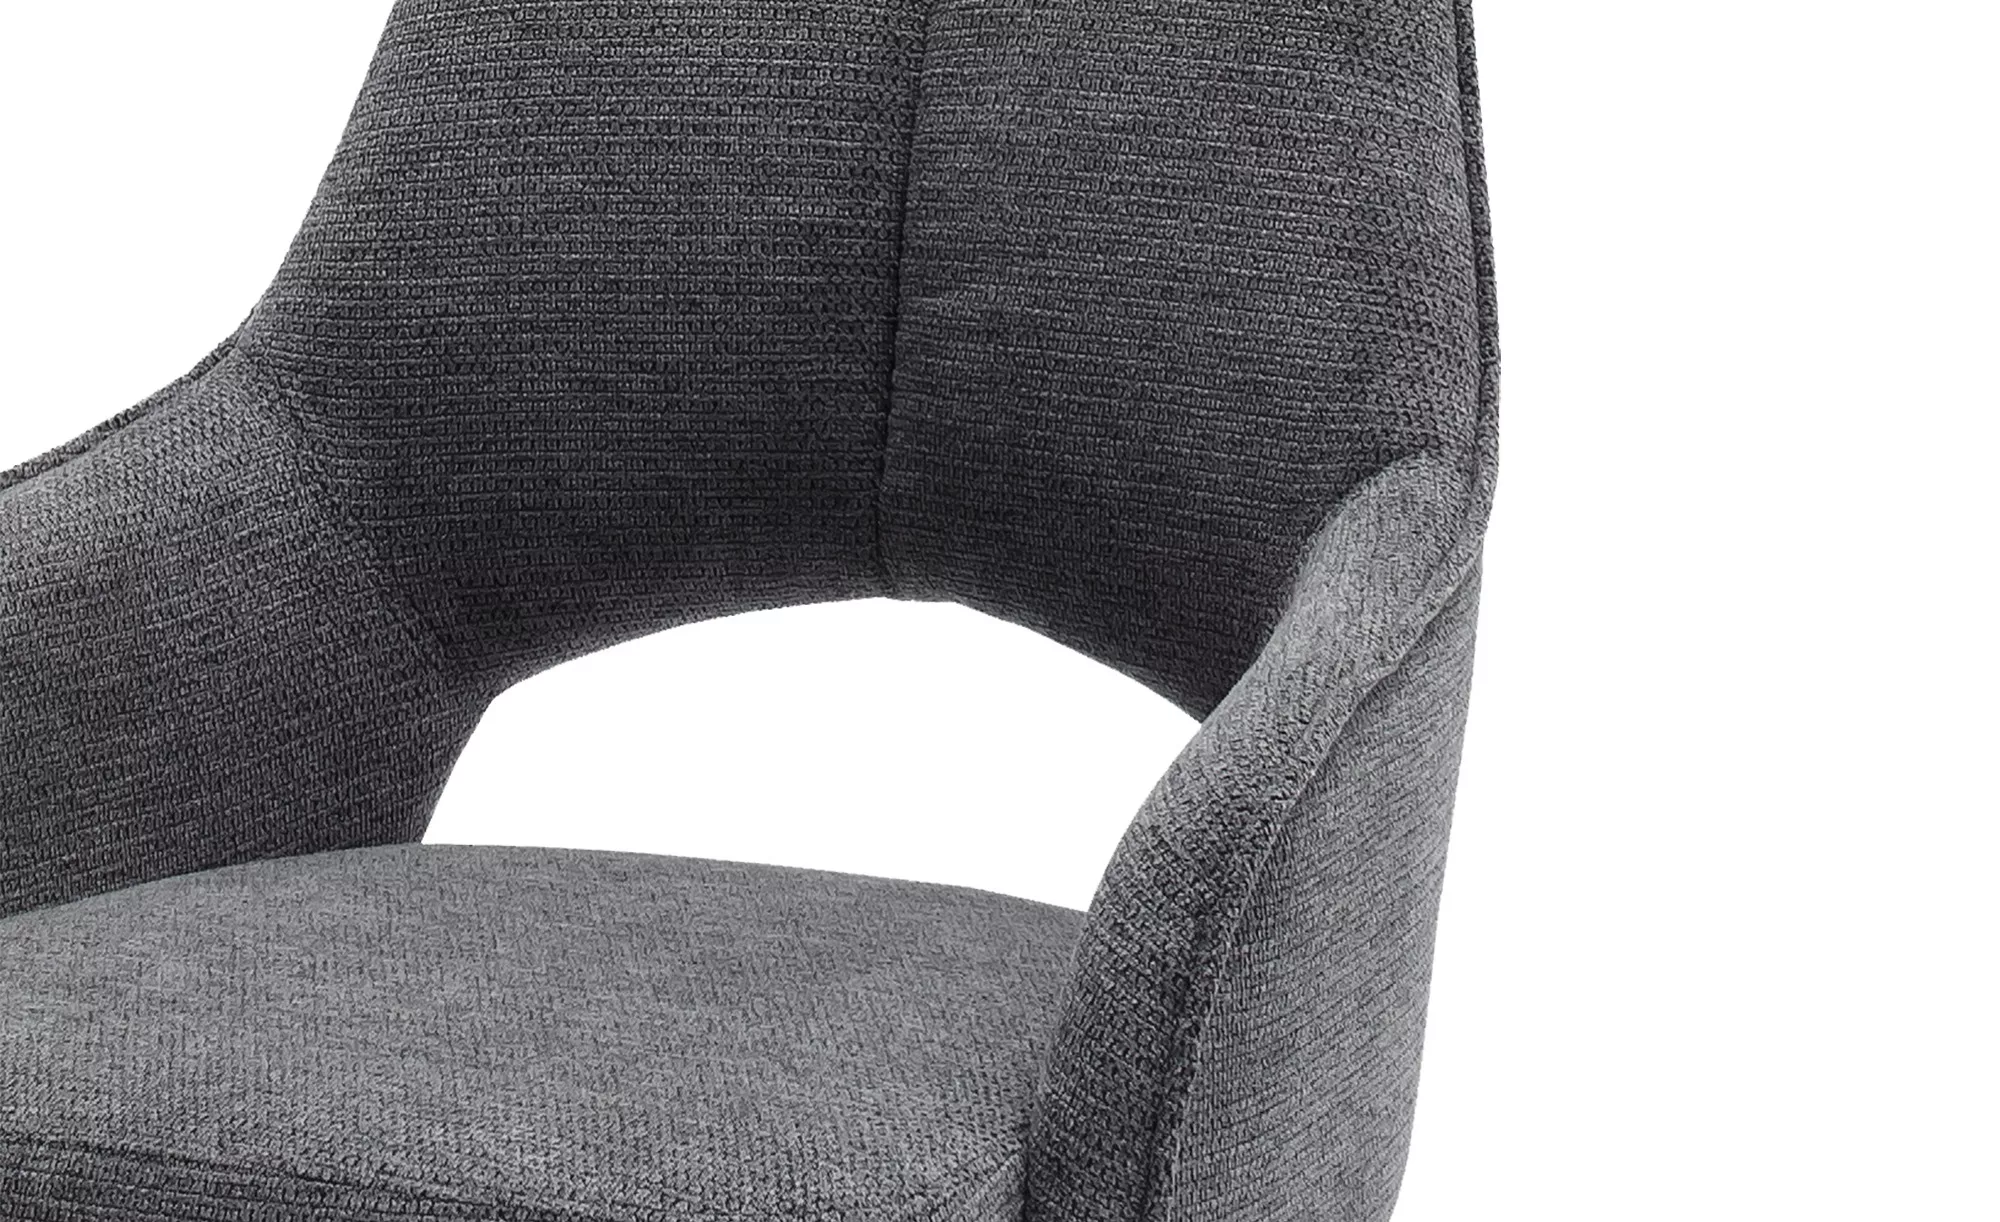 MCA furniture Armlehnstuhl "Bangor", 2 St. günstig online kaufen